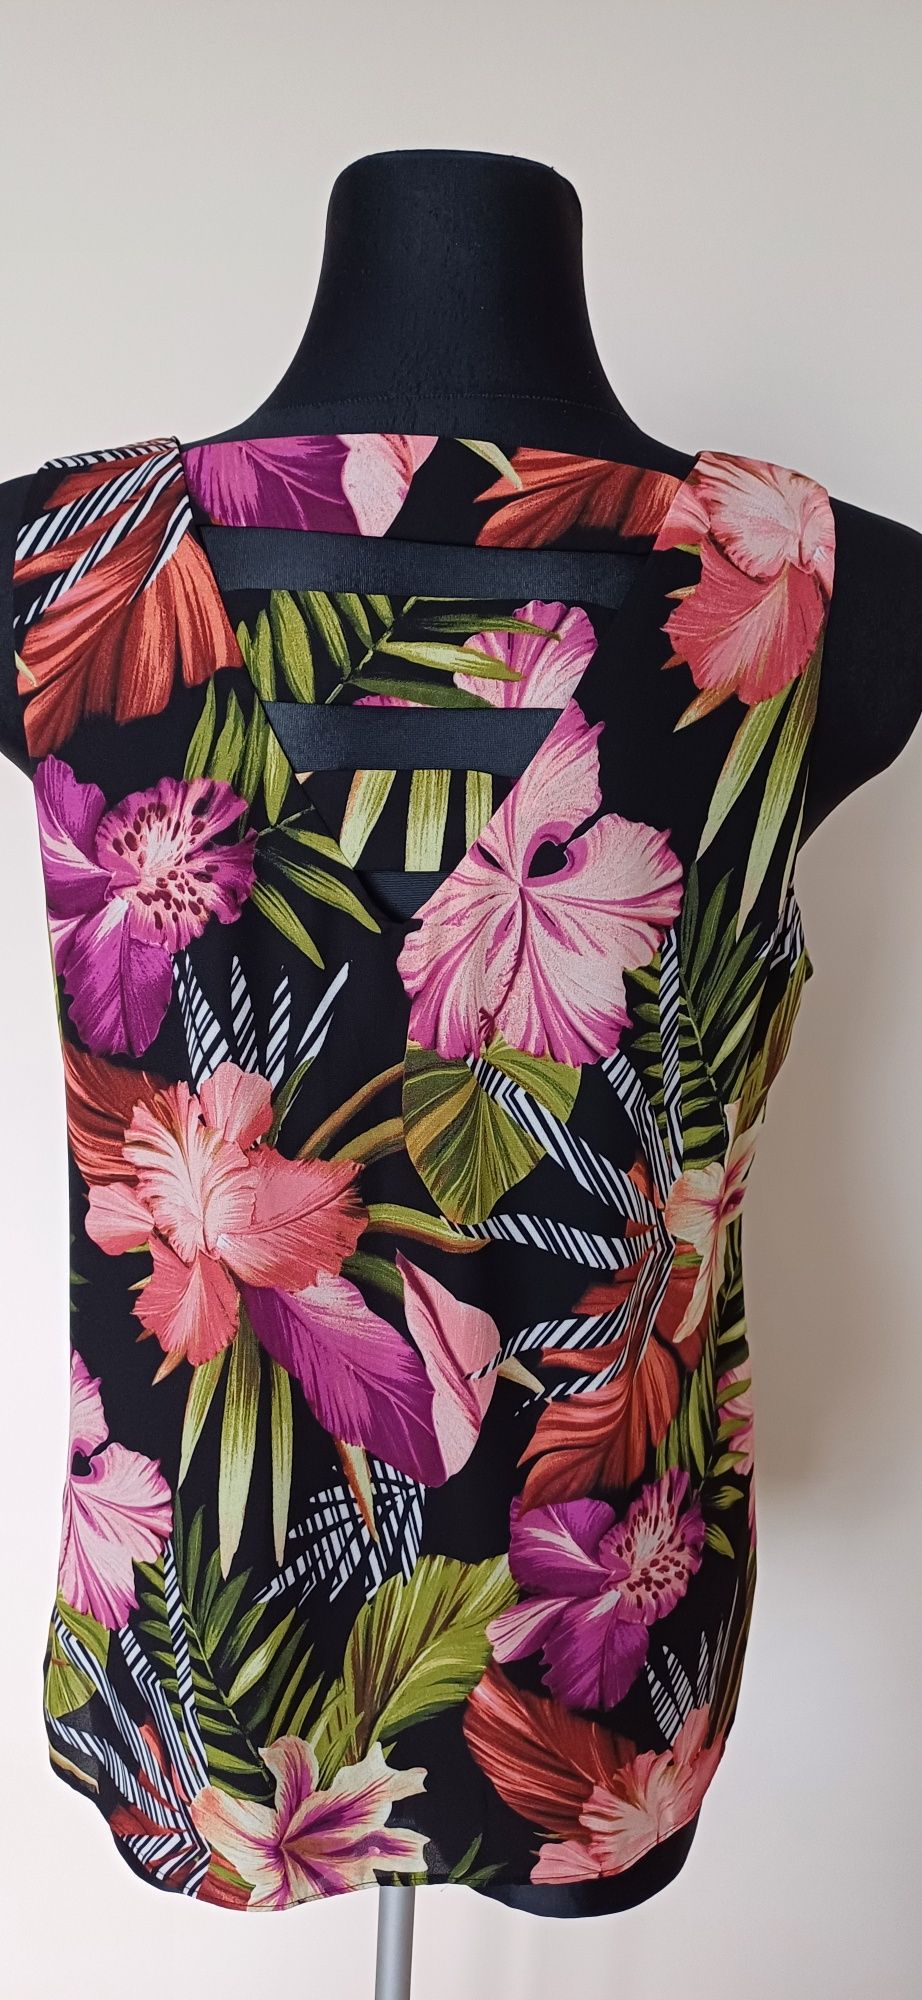 Piękna bluzka/koszula Thalia Sodi w kwiaty r.XL